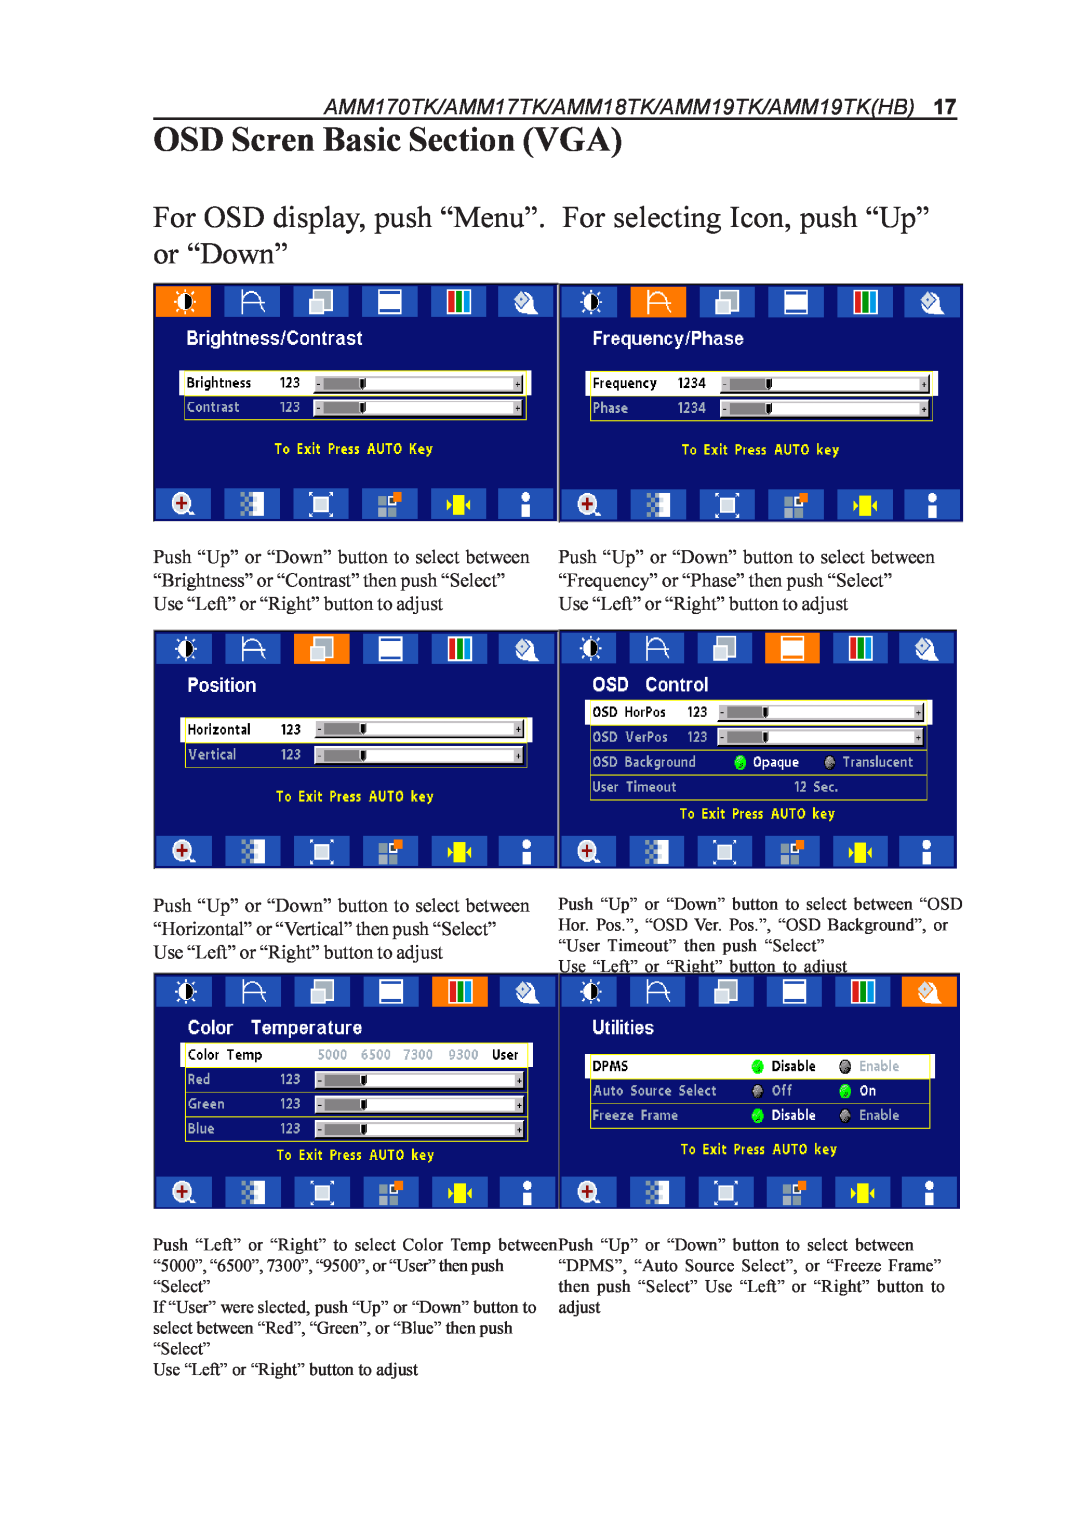 Elo TouchSystems manual OSD Scren Basic Section VGA, AMM170TK/AMM17TK/AMM18TK/AMM19TK/AMM19TKHB 